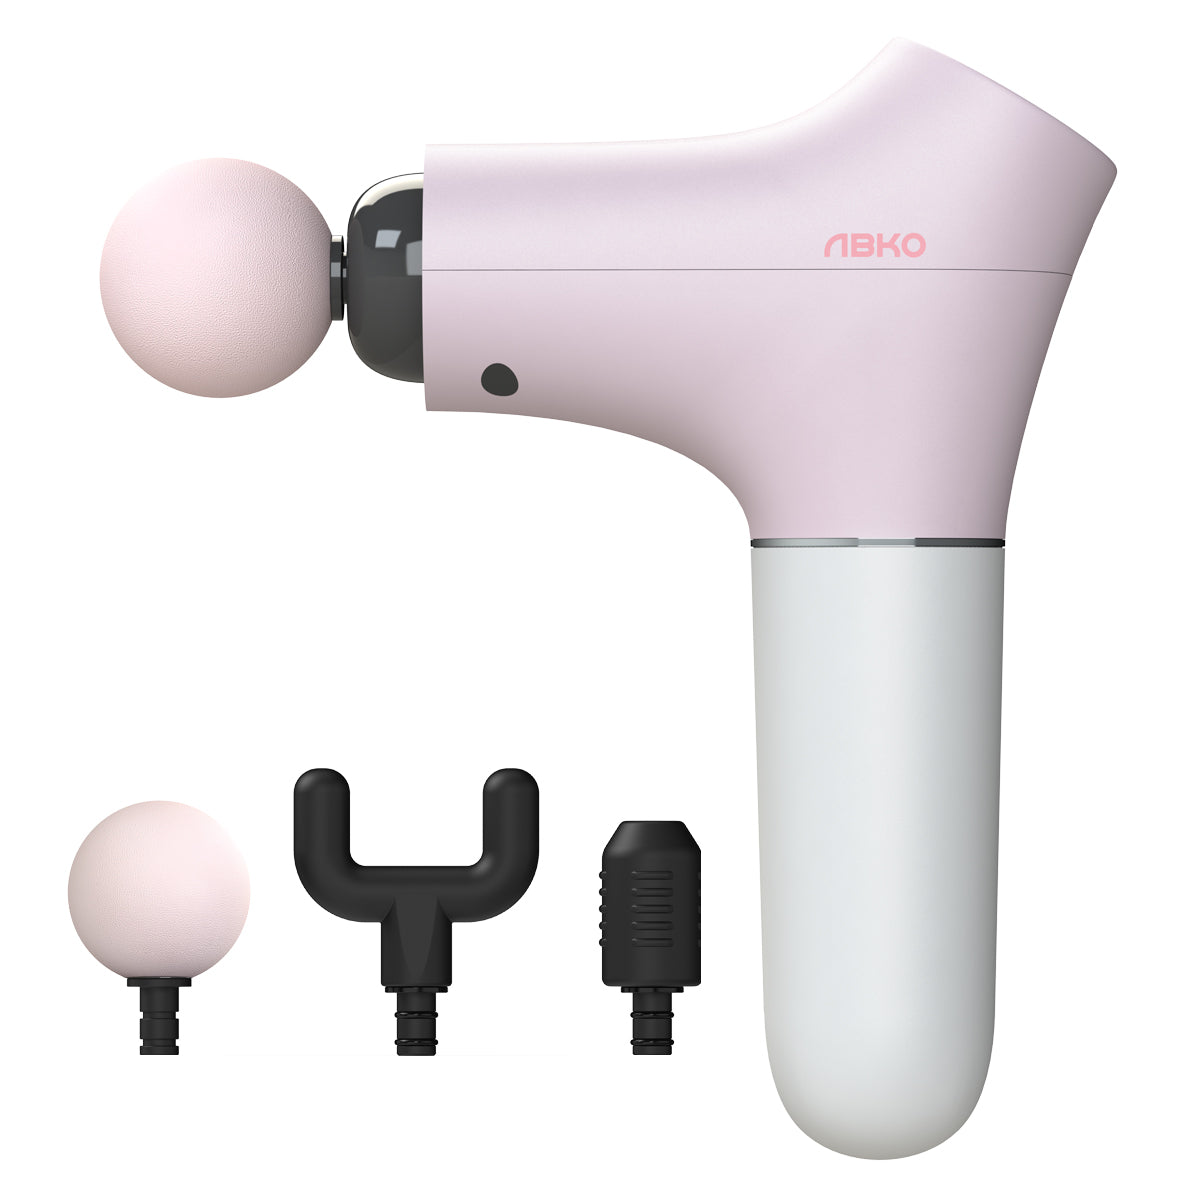 ABKO MG03 韓國 Pink Cordless Massage Gun 極輕身450g, 低音操作52db, 強勁按力2400rpm mini靜音筋膜按摩槍